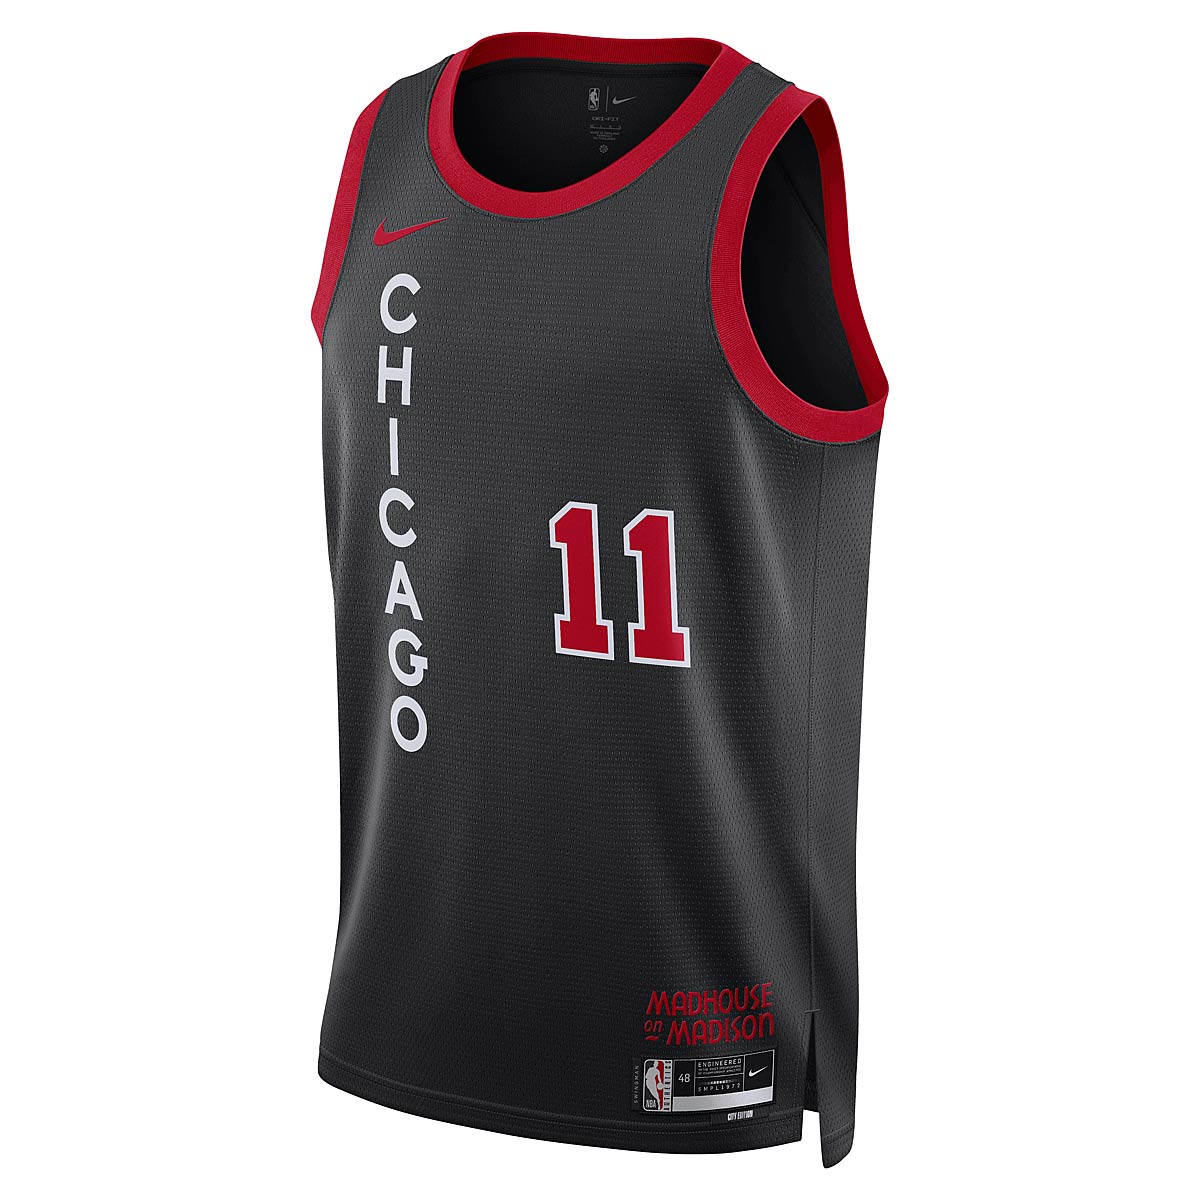 Nike NBA Chicago Bulls Dri-fit City Edition Swingman Jersey Demar Derozan, Schwarz/university Rot/schwarz S